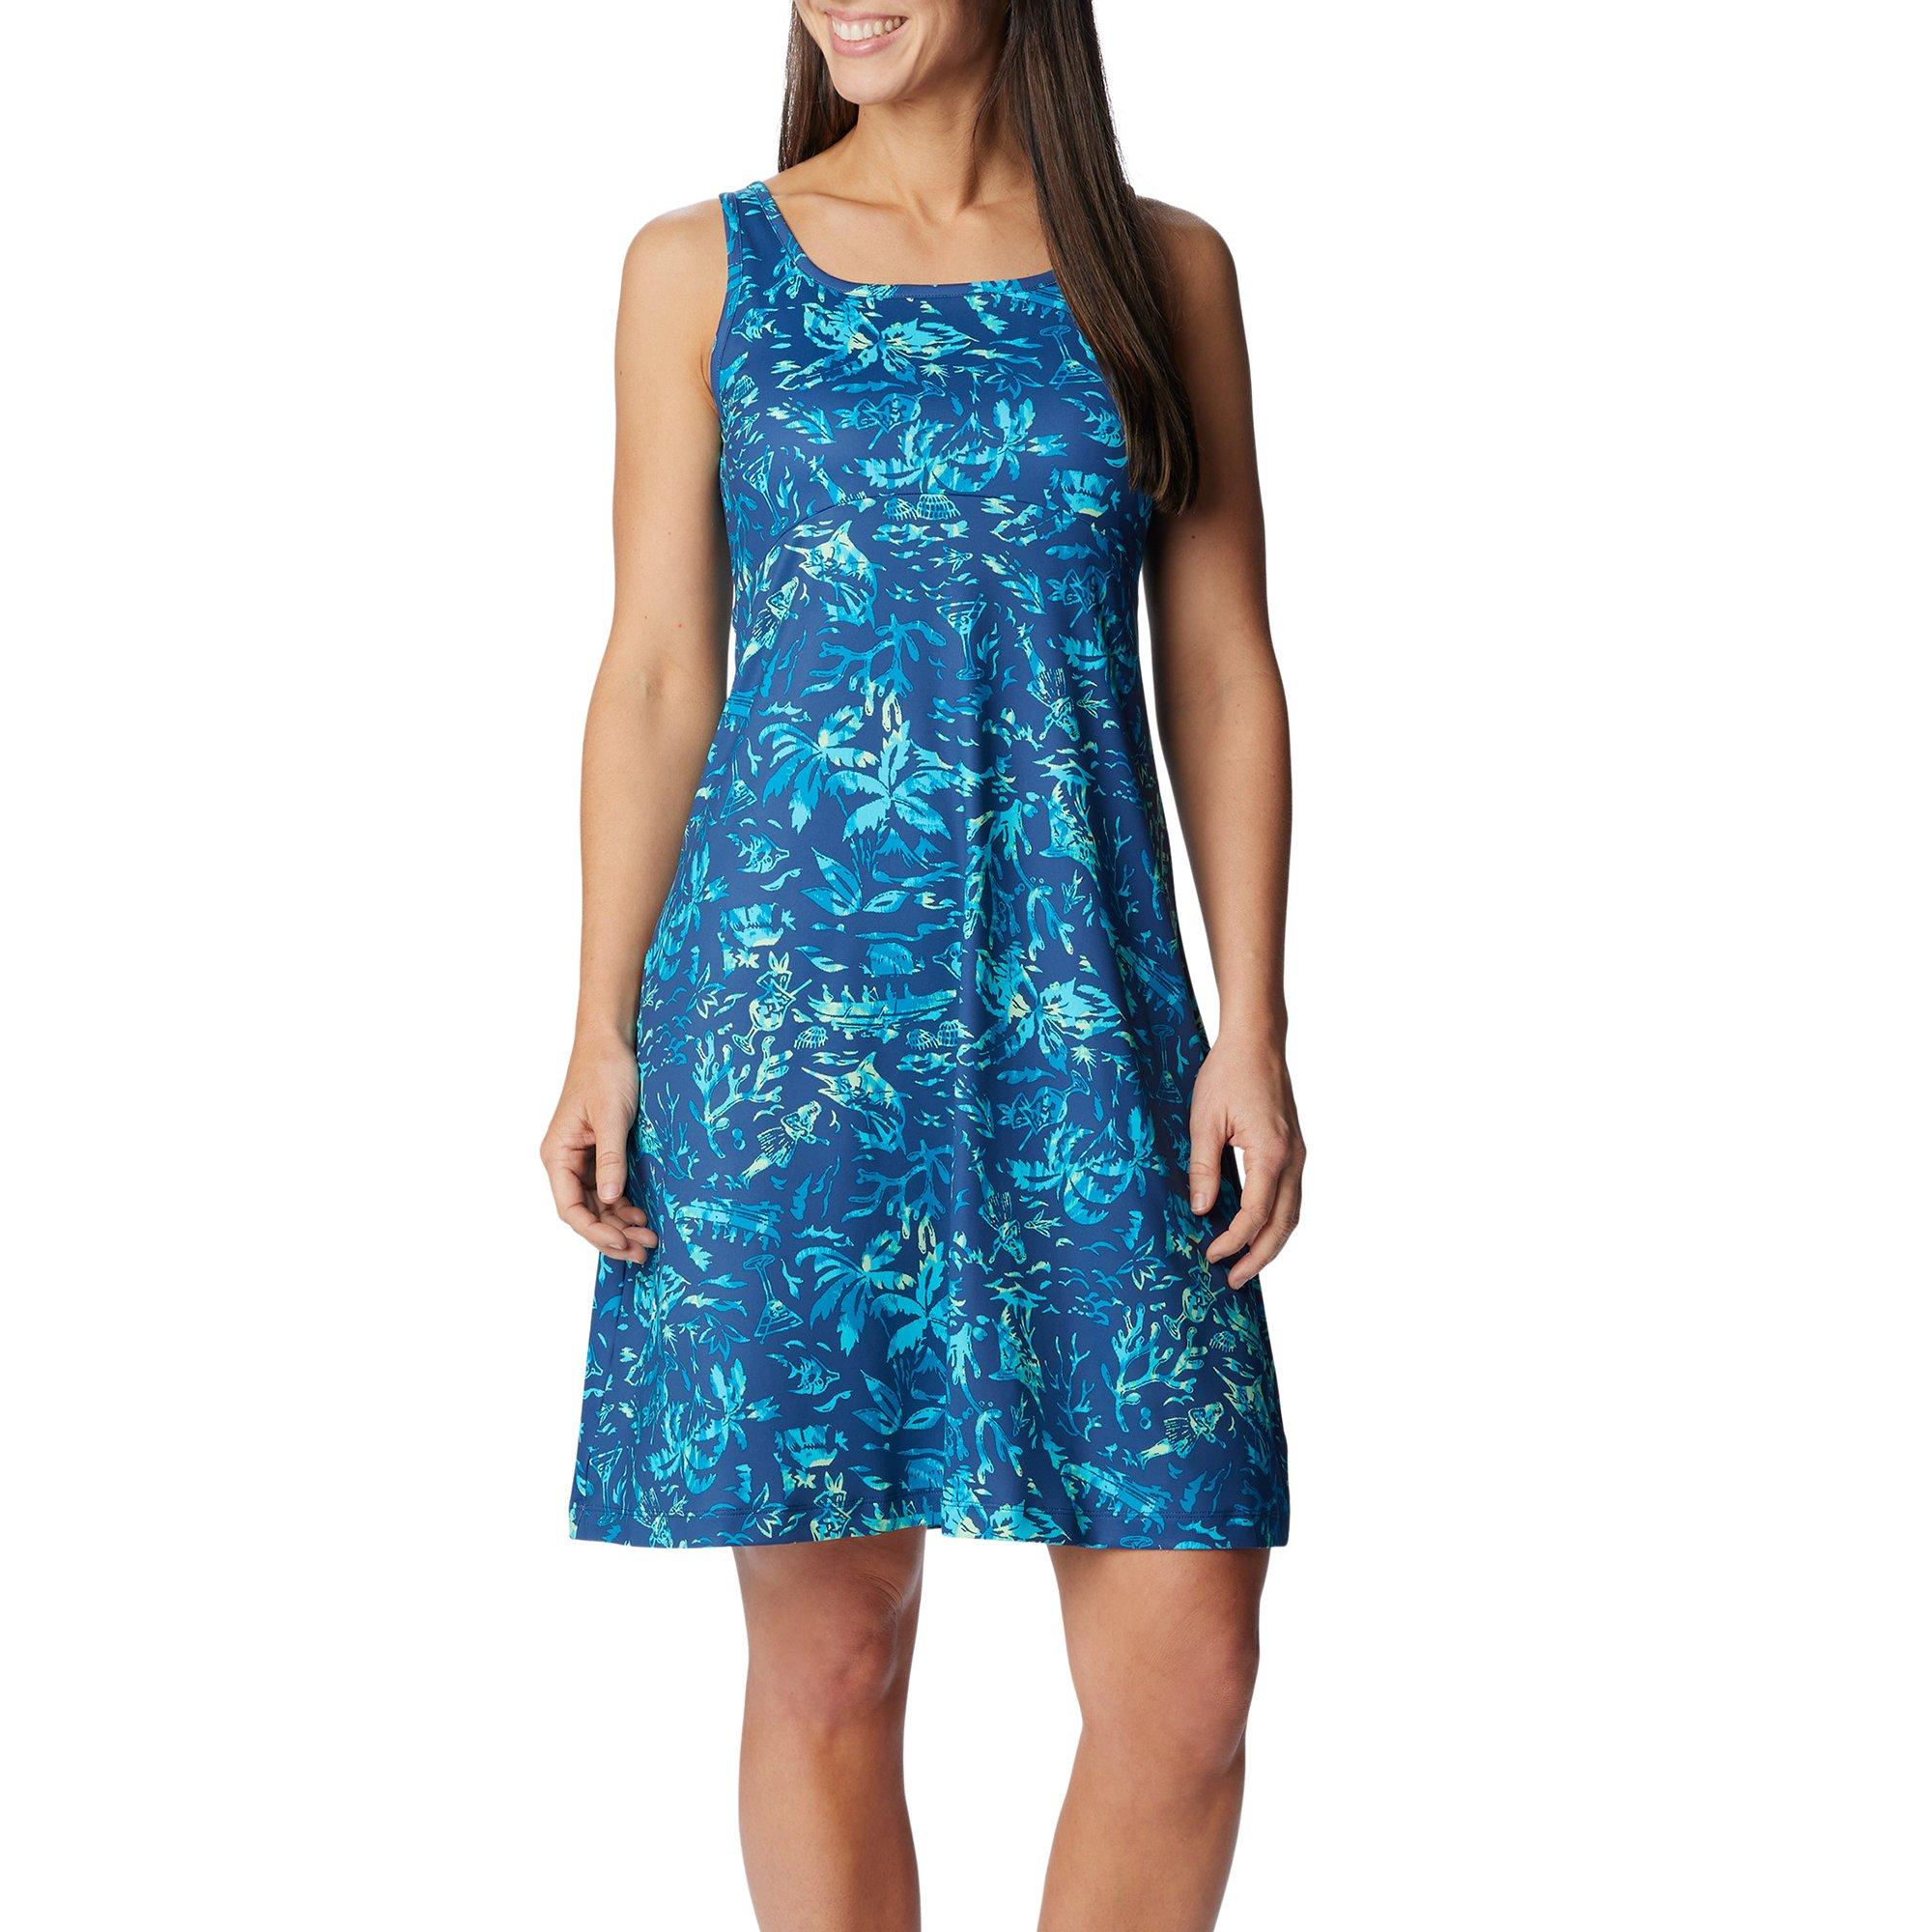 Reel Legends Womens Compression Dress Size Petite Large Blue Outdoor Dress